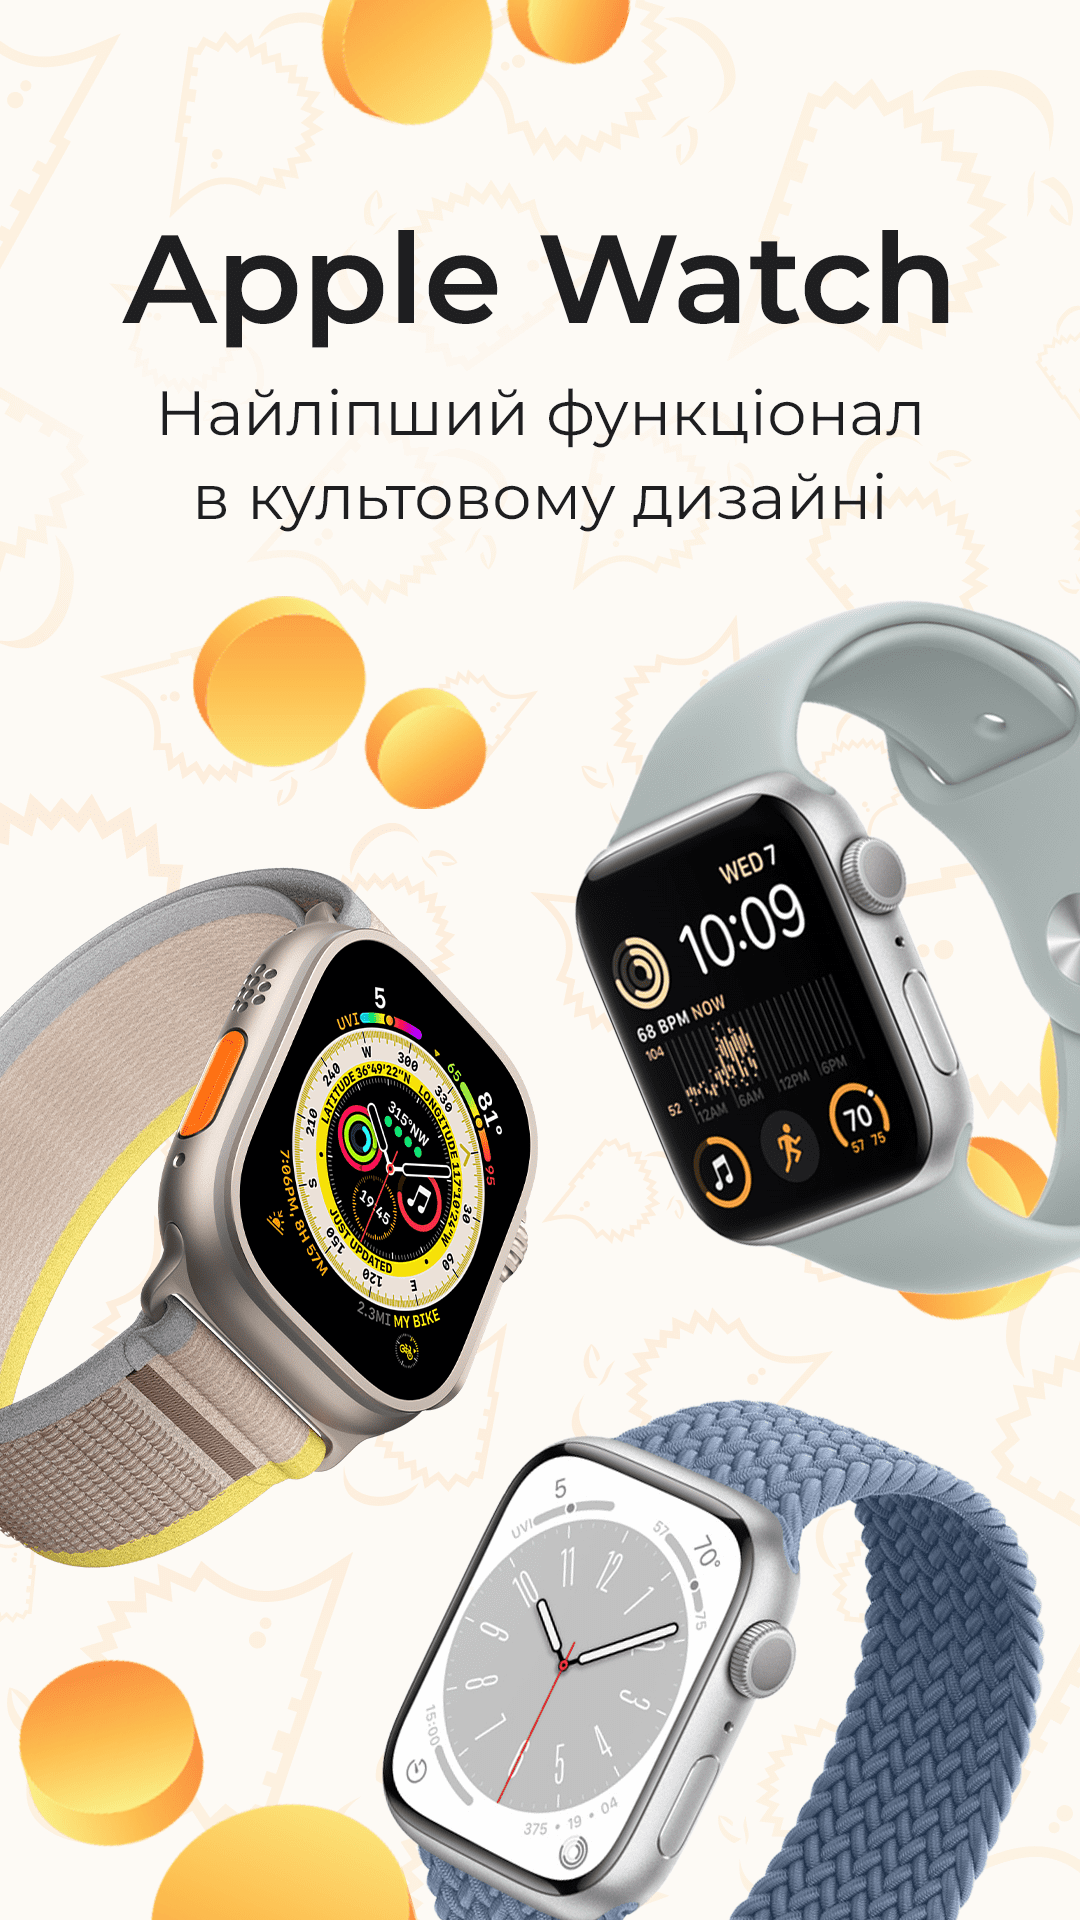 All Apple Watch